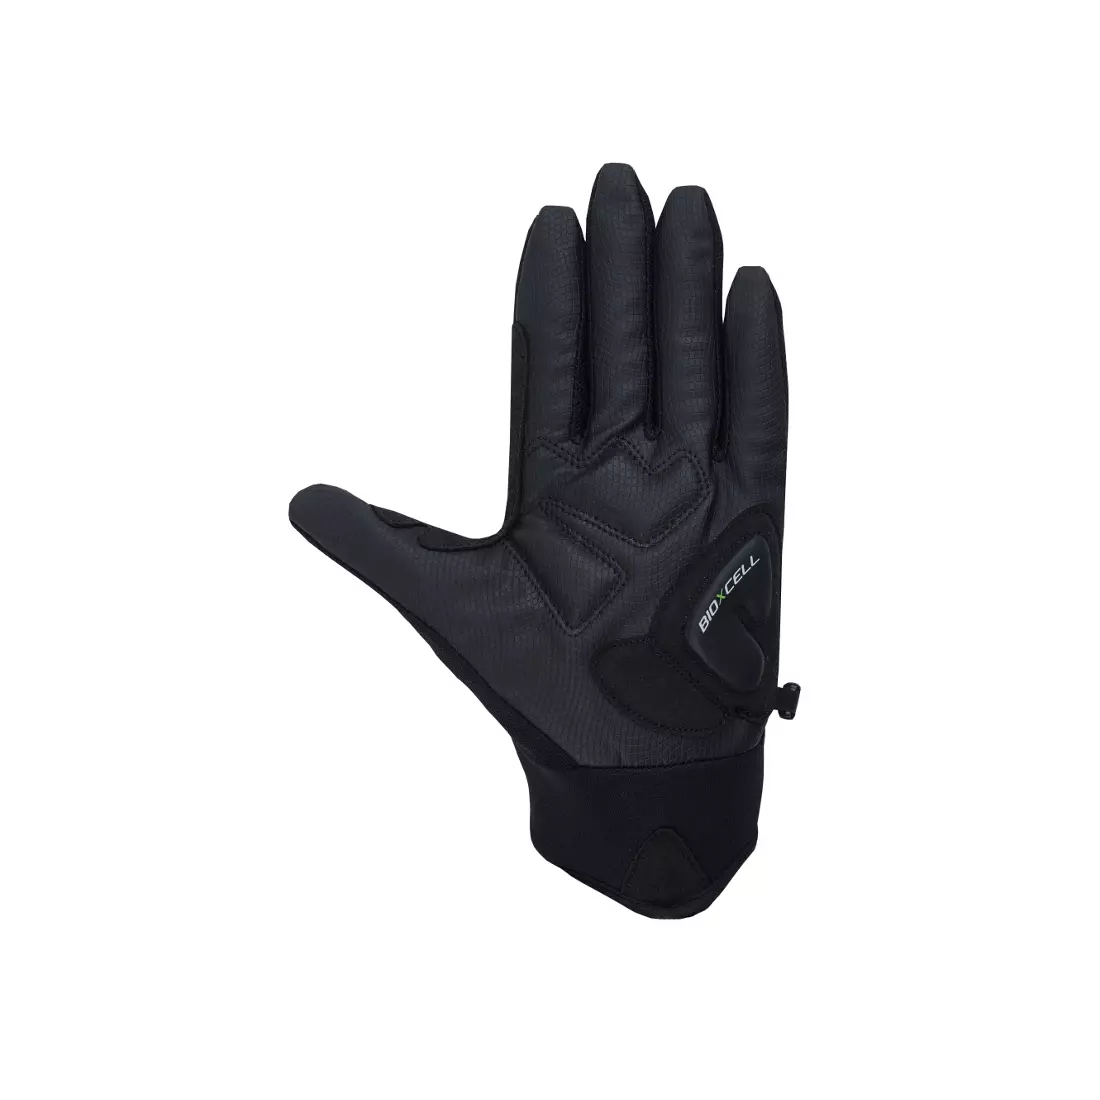 CHIBA BIOXCELL TOURING summer cycling gloves, black 3060718